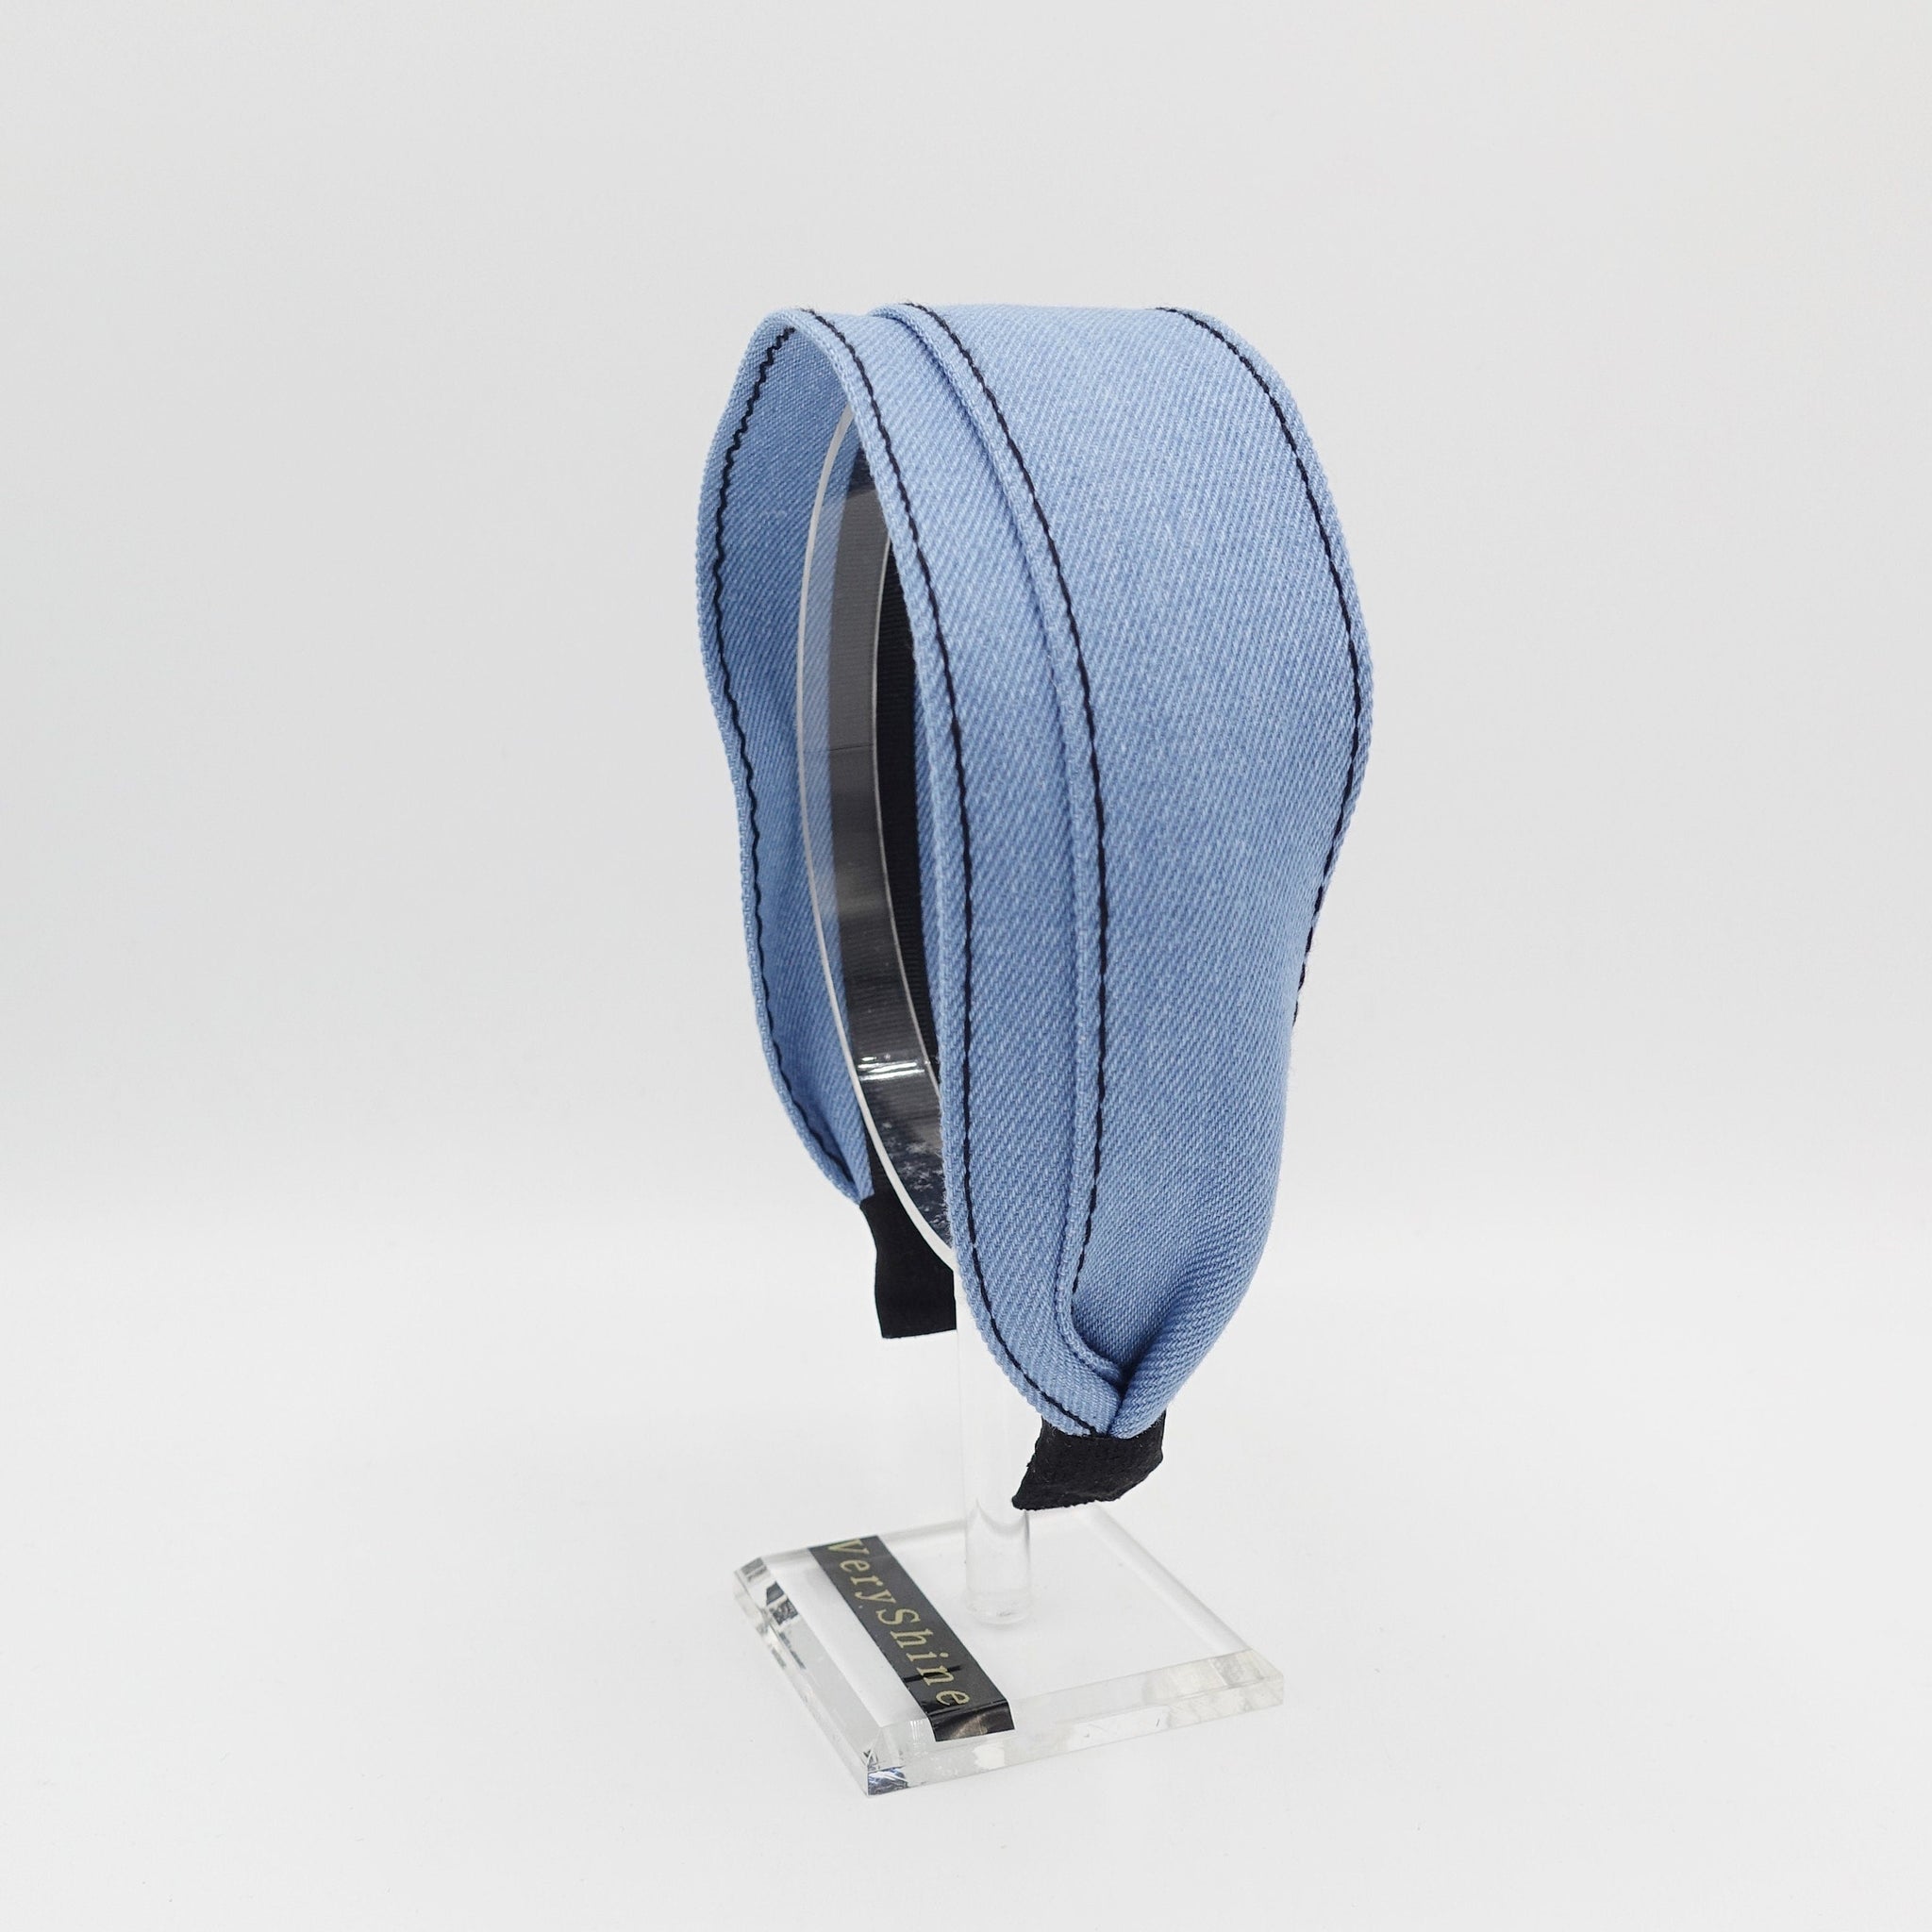 VeryShine Headband Sky blue denim flat headband stitch hairband casual hair accessory for women